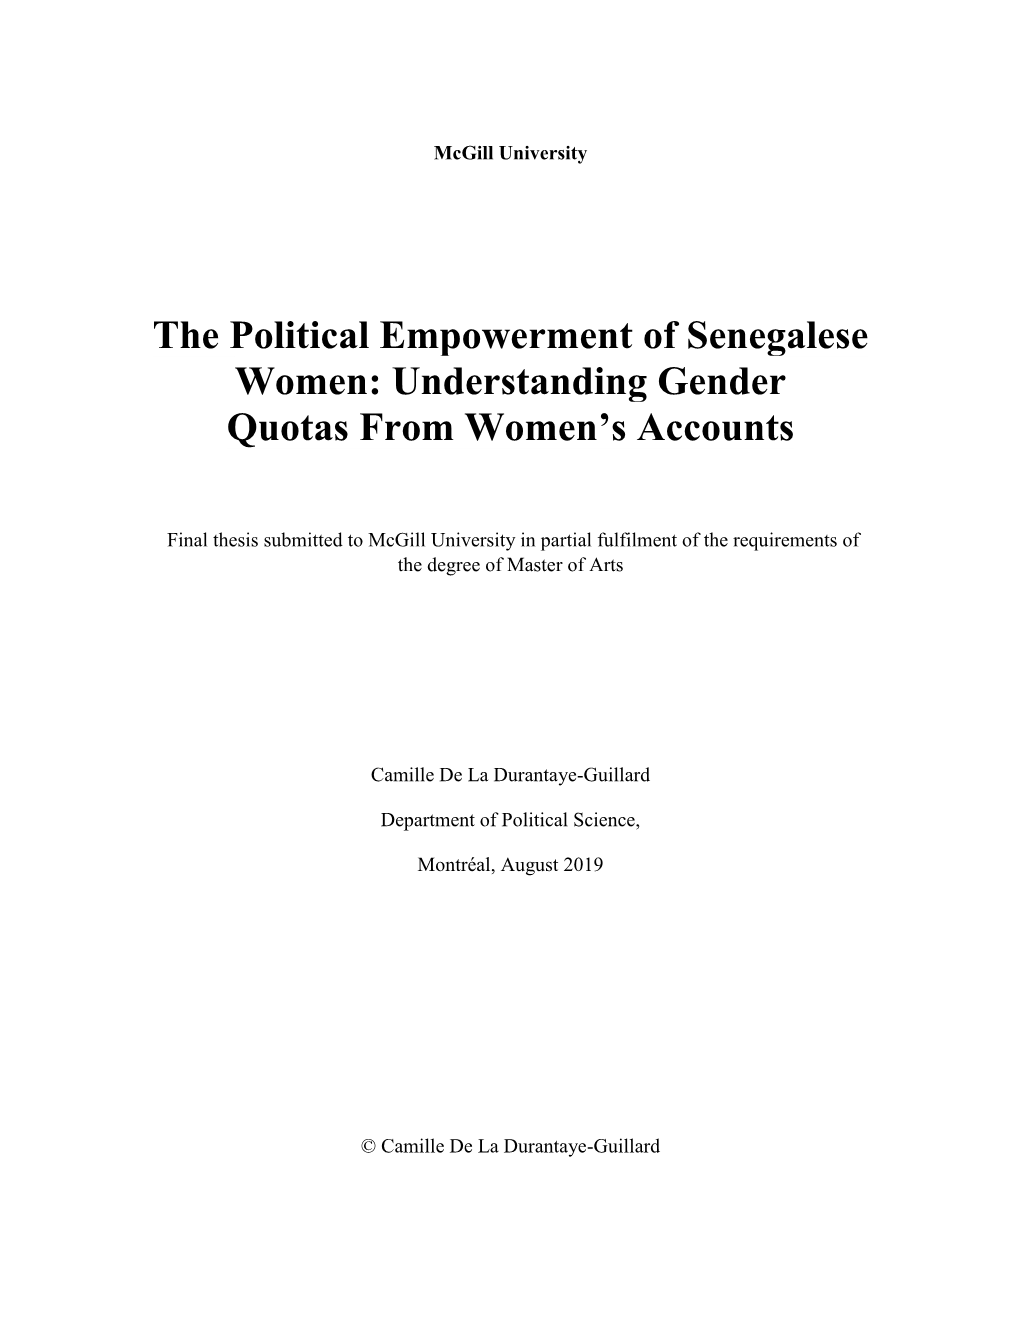 The Political Empowerment of Senegalese Women: Understanding Gender Quotas from Women’S Accounts